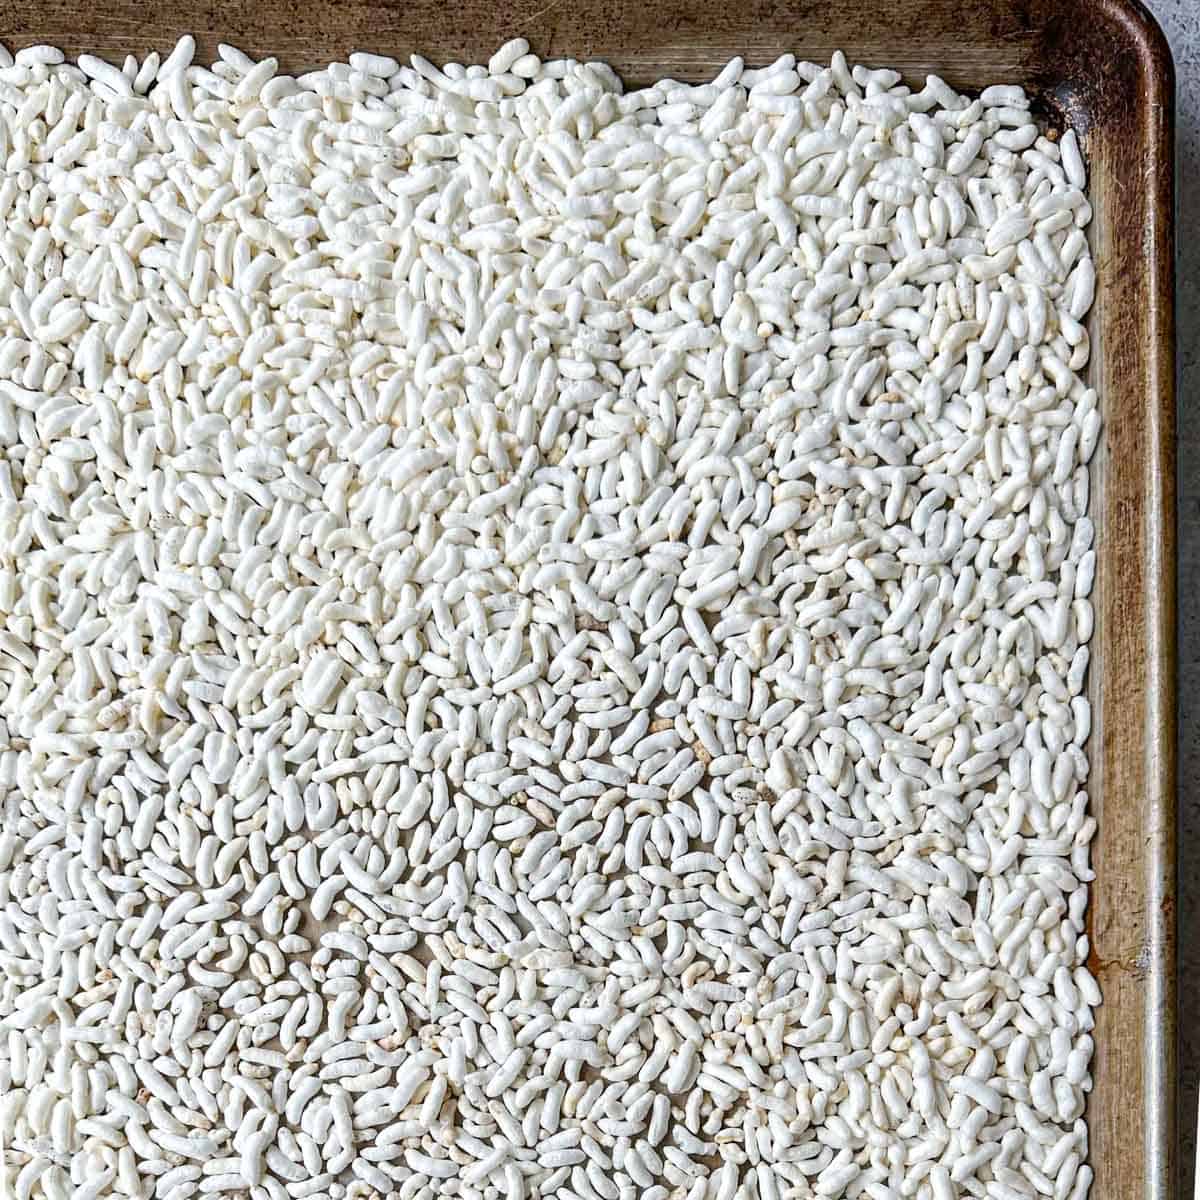 Sheet tray of baked muramura or rice puffs